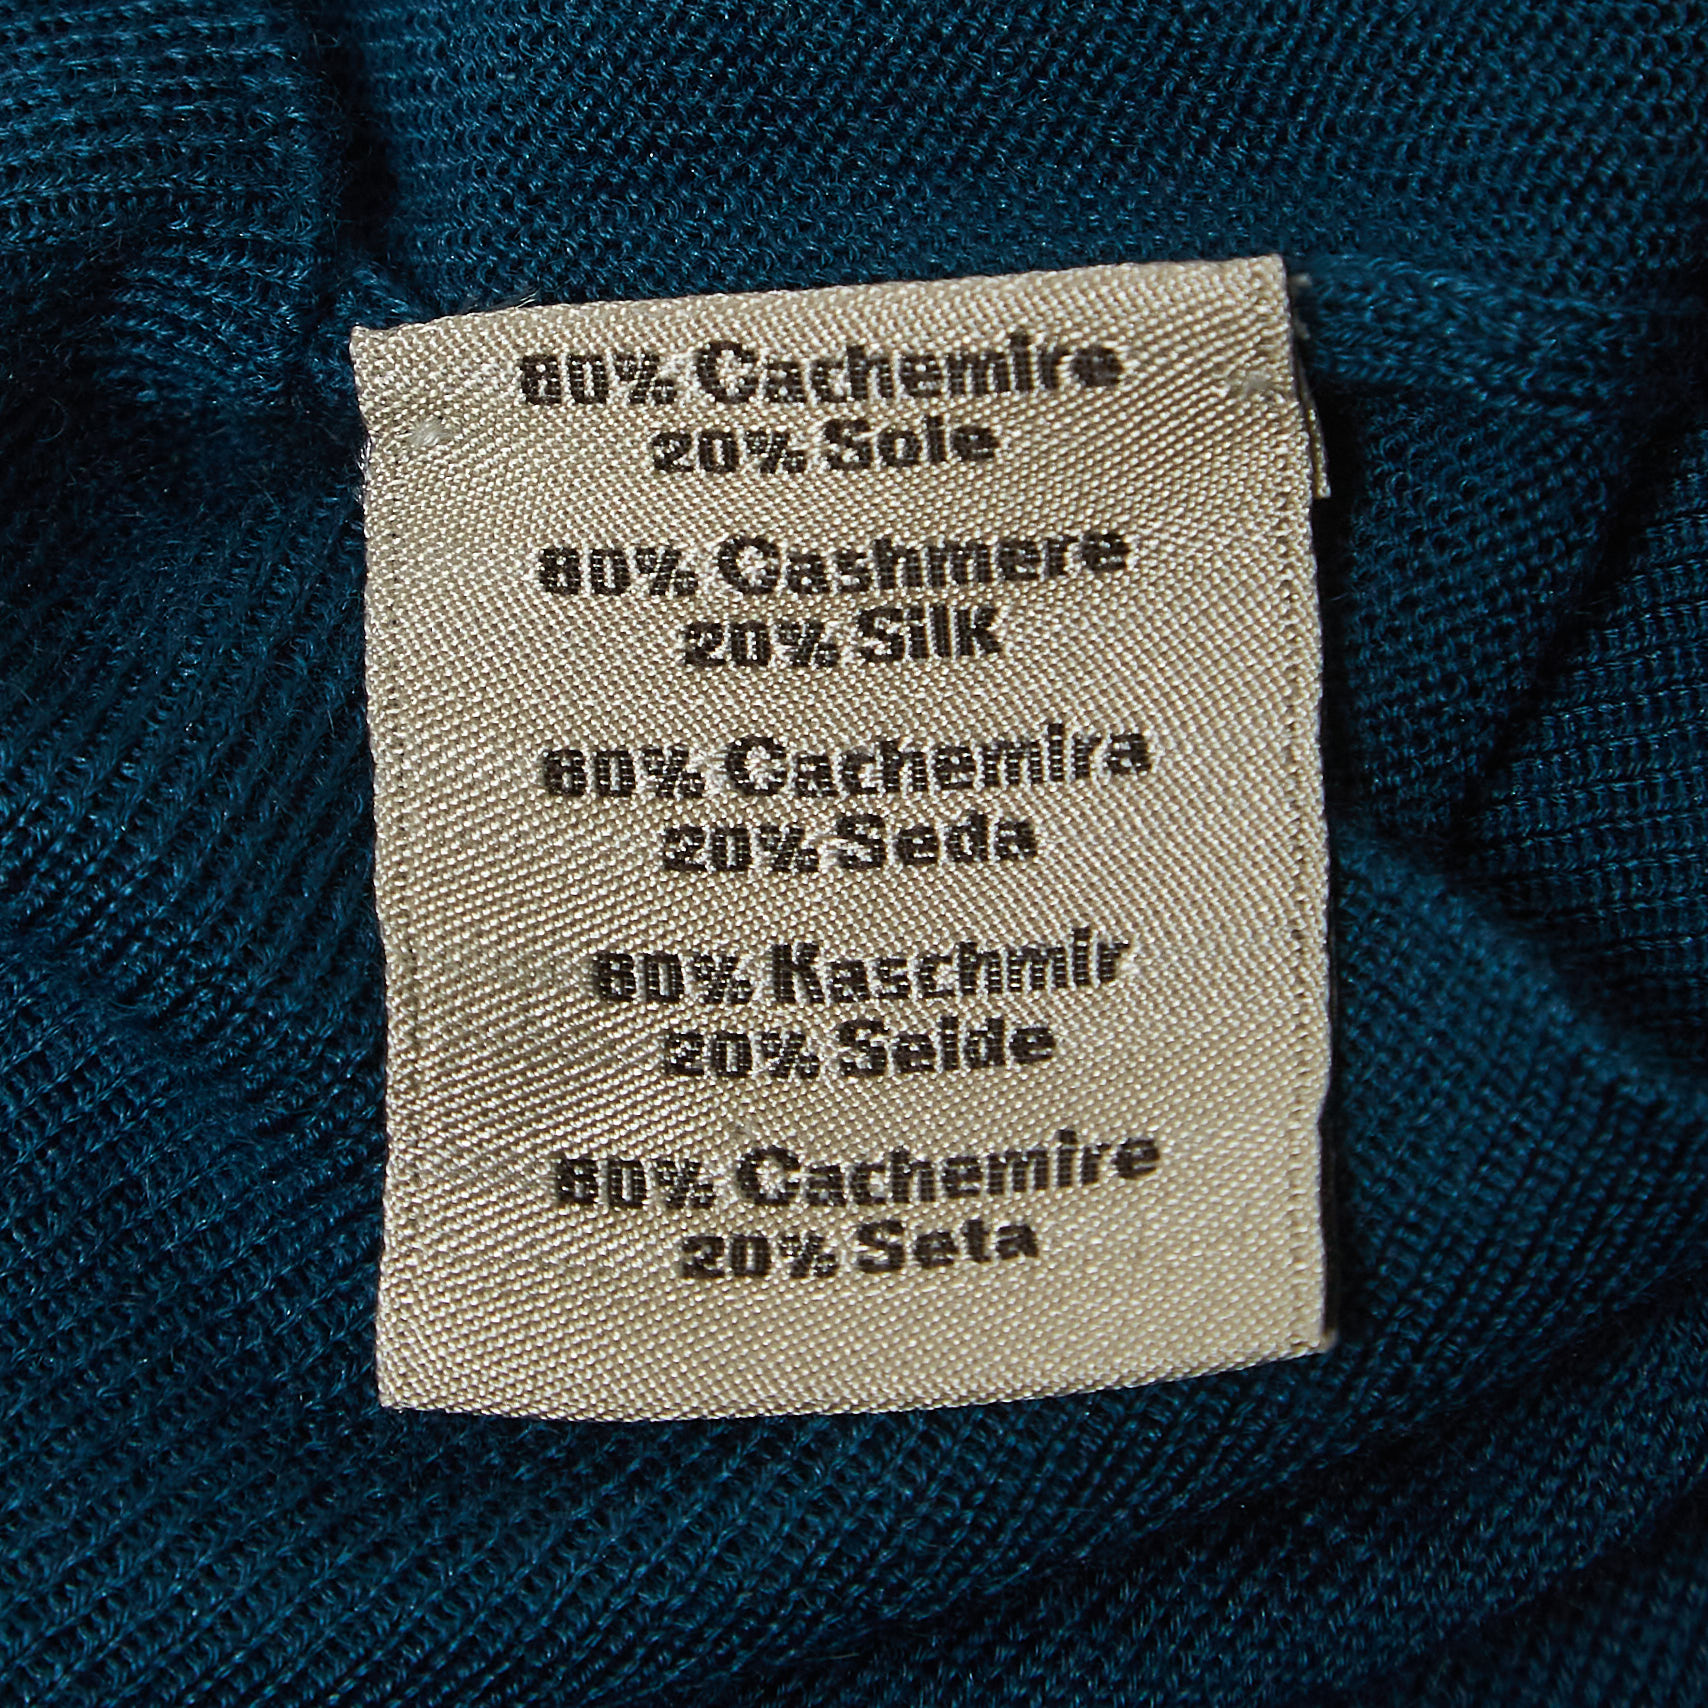 Hermes Teal Blue Cashmere & Silk Knit Turtle Neck Sweater XL